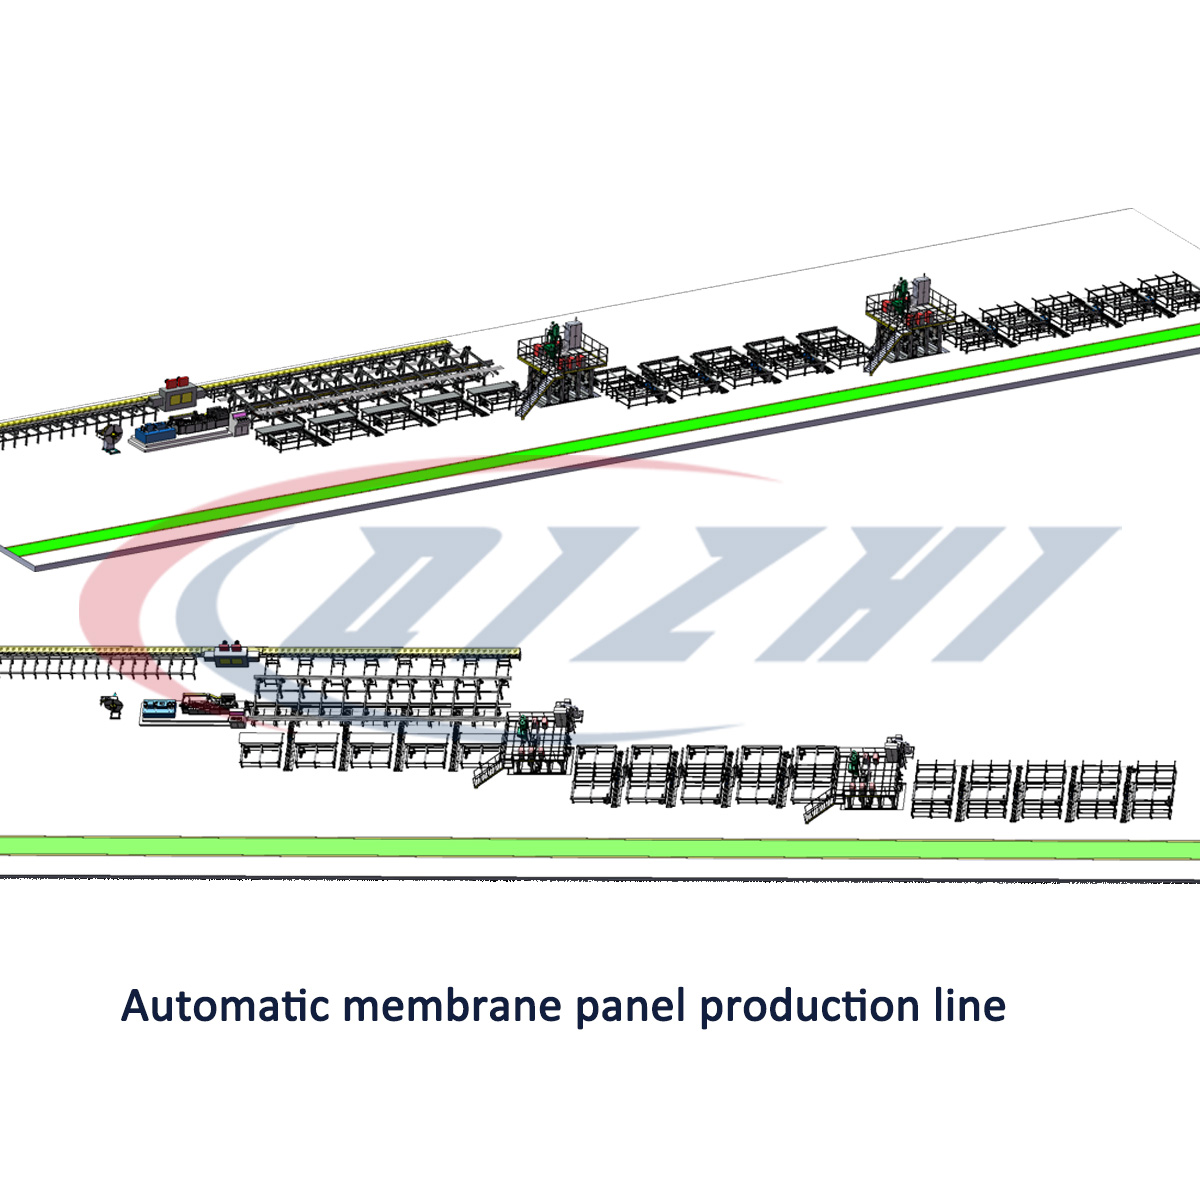 Linea di produzione automatica di pannelli a membrana